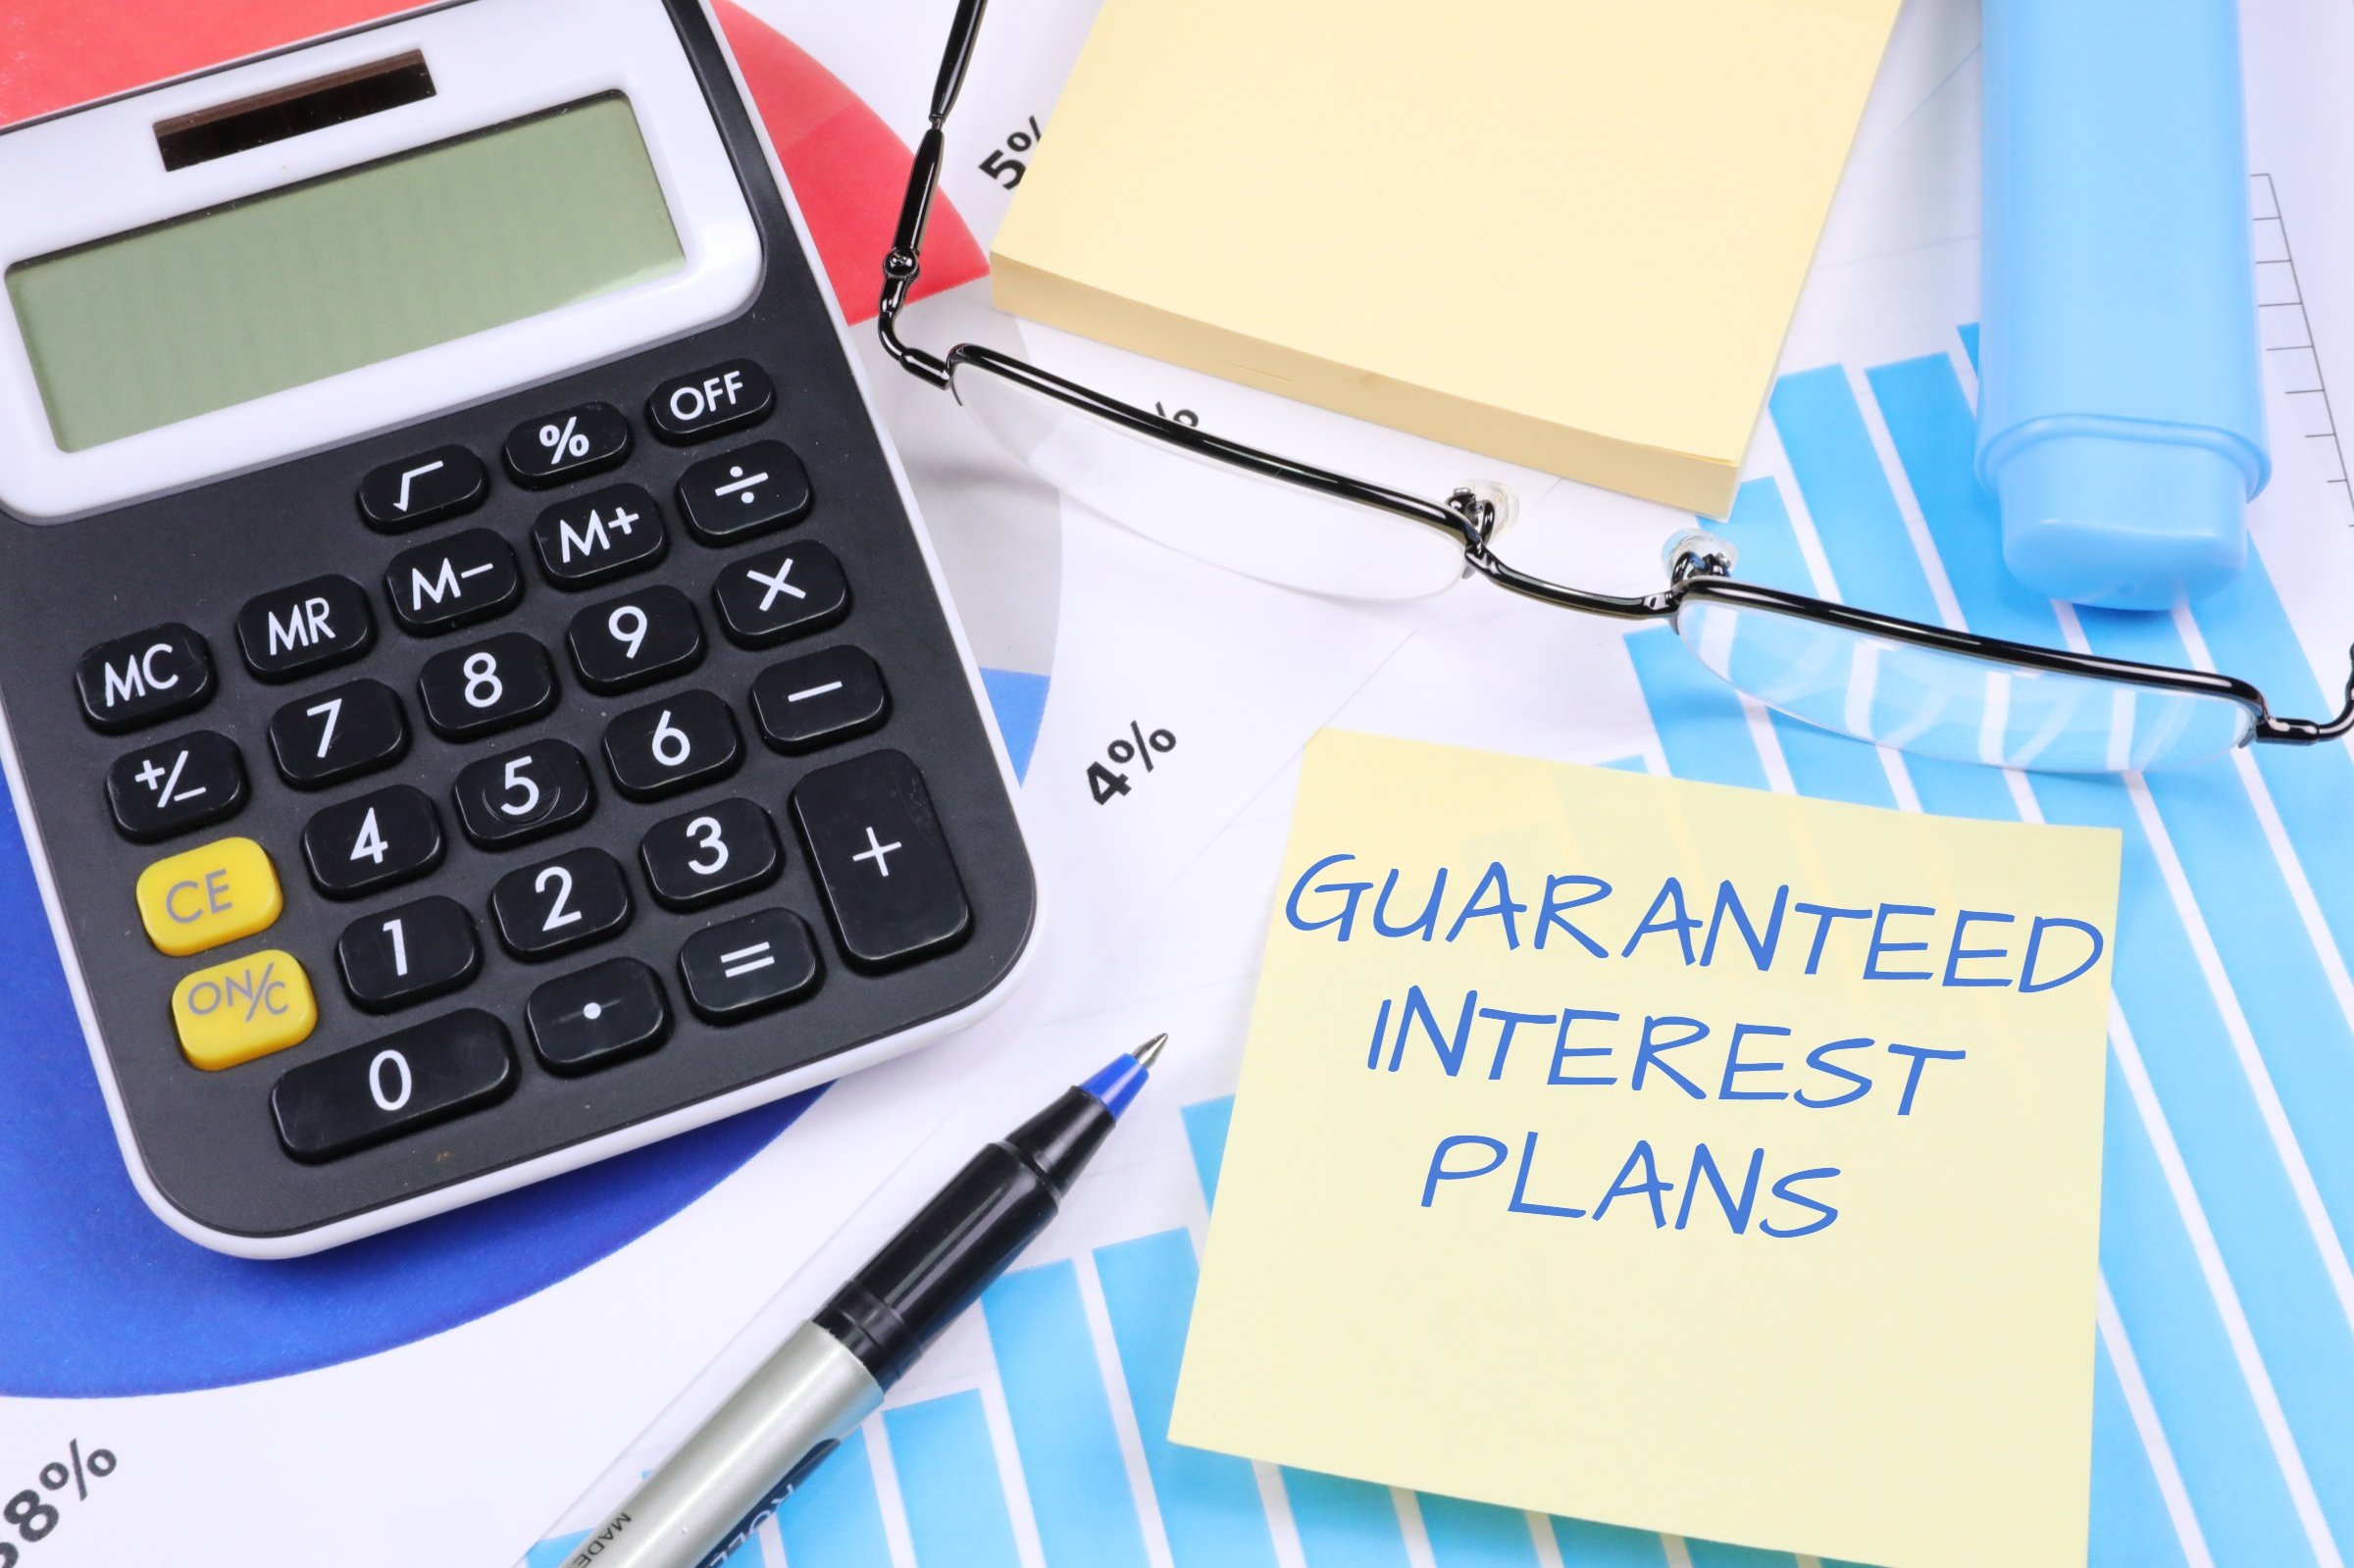 Guaranteed Interest Plans